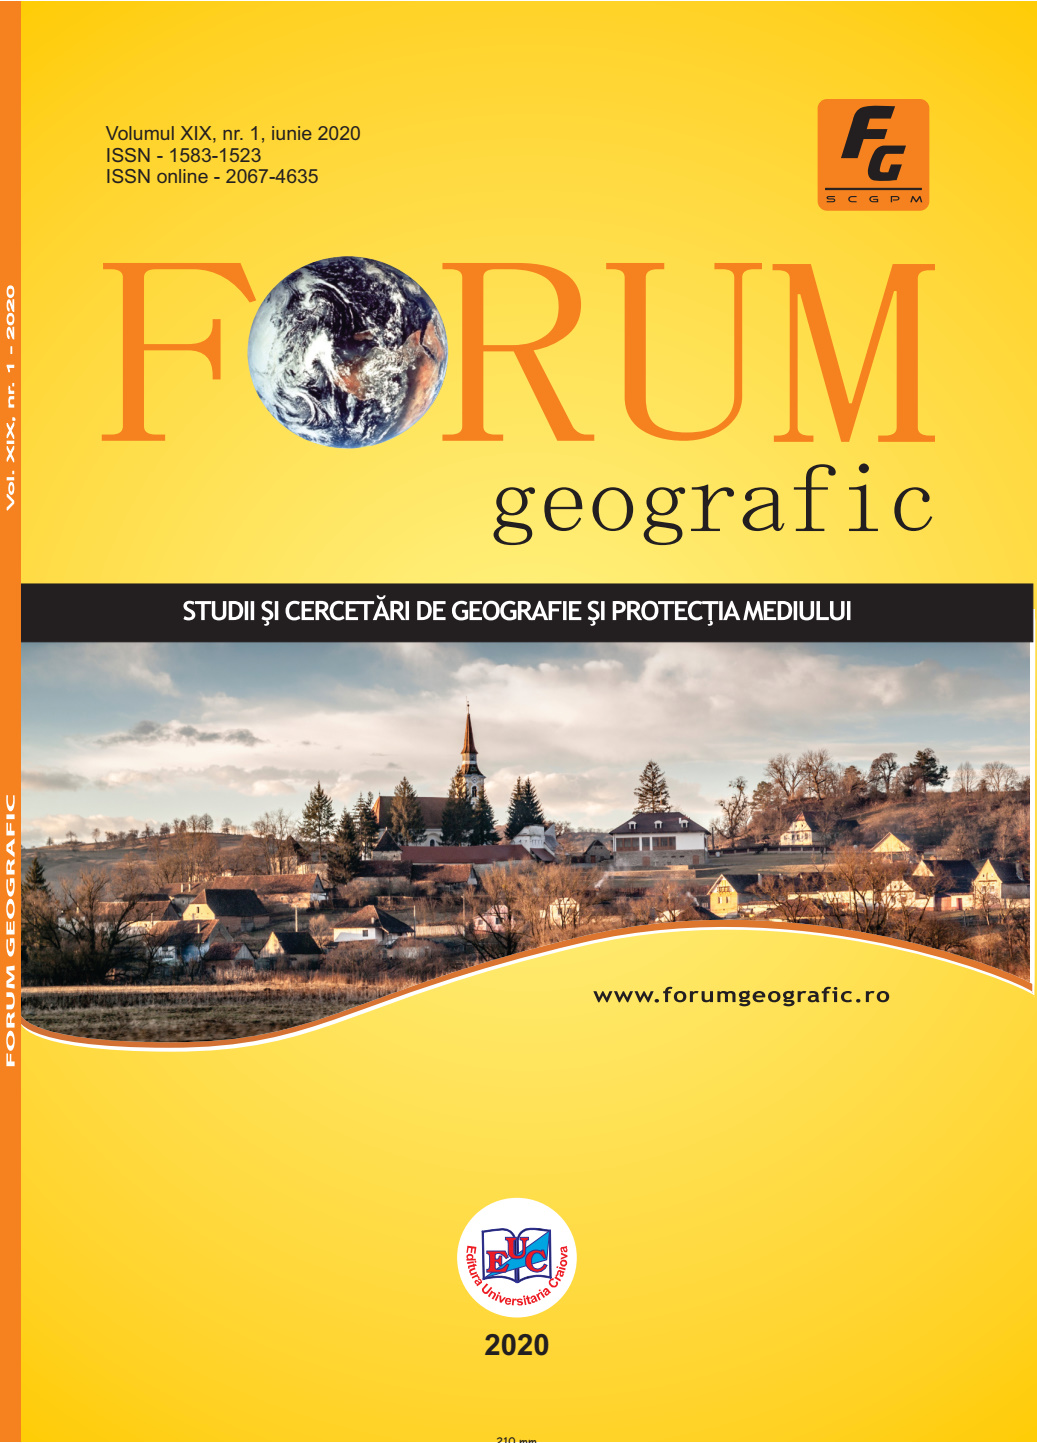 Forum geografic: Volum XIX, număr 1